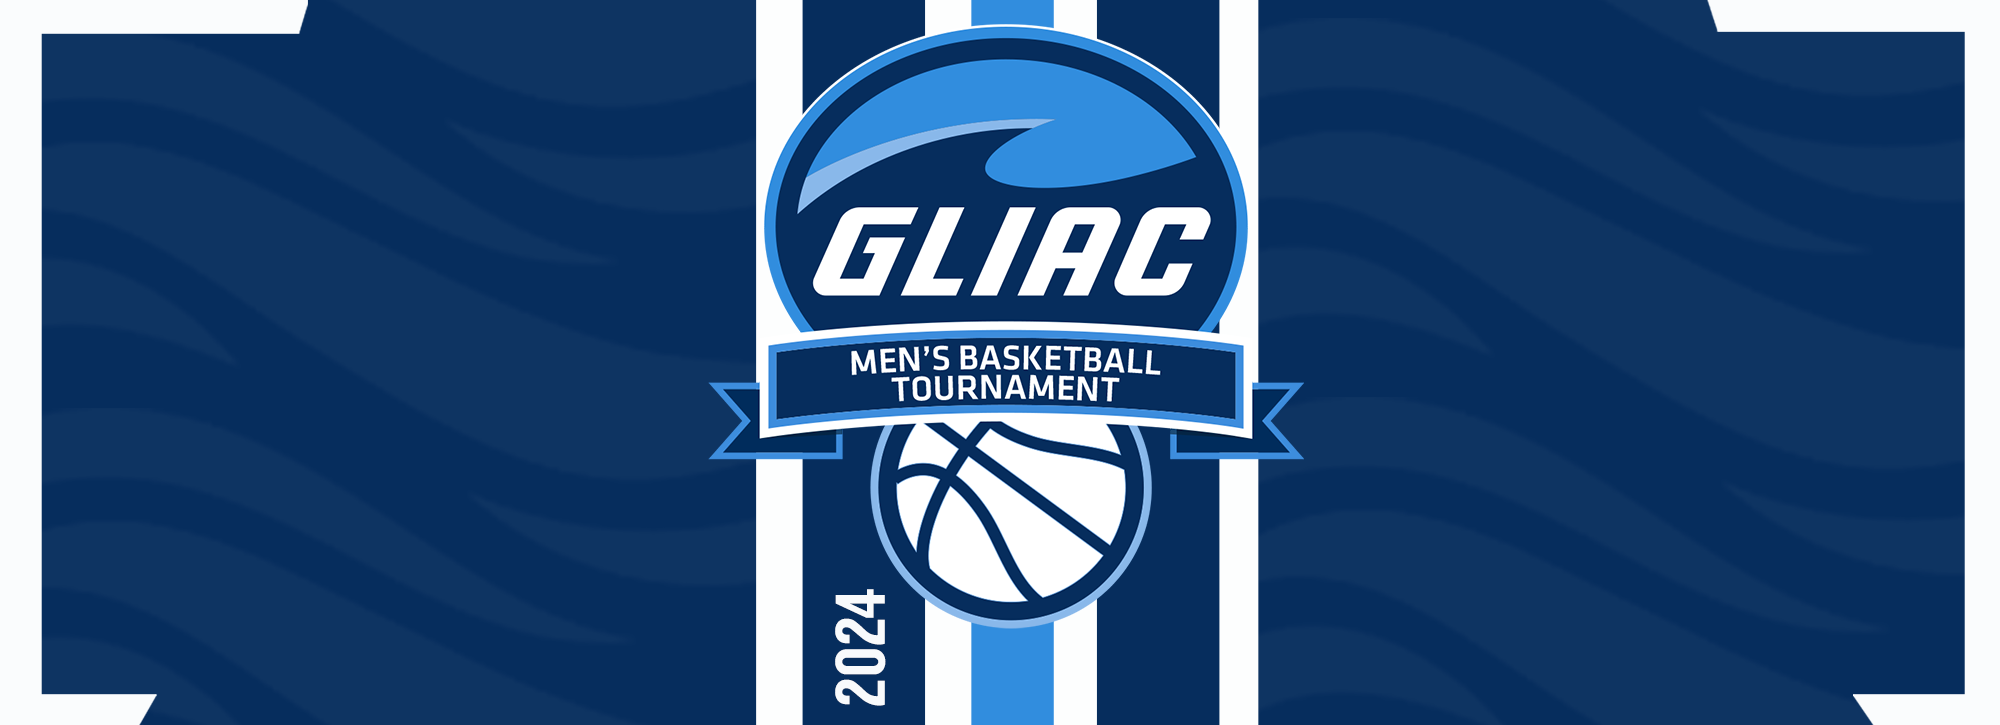 Field Announced for GLIAC Men's Basketball Tournament